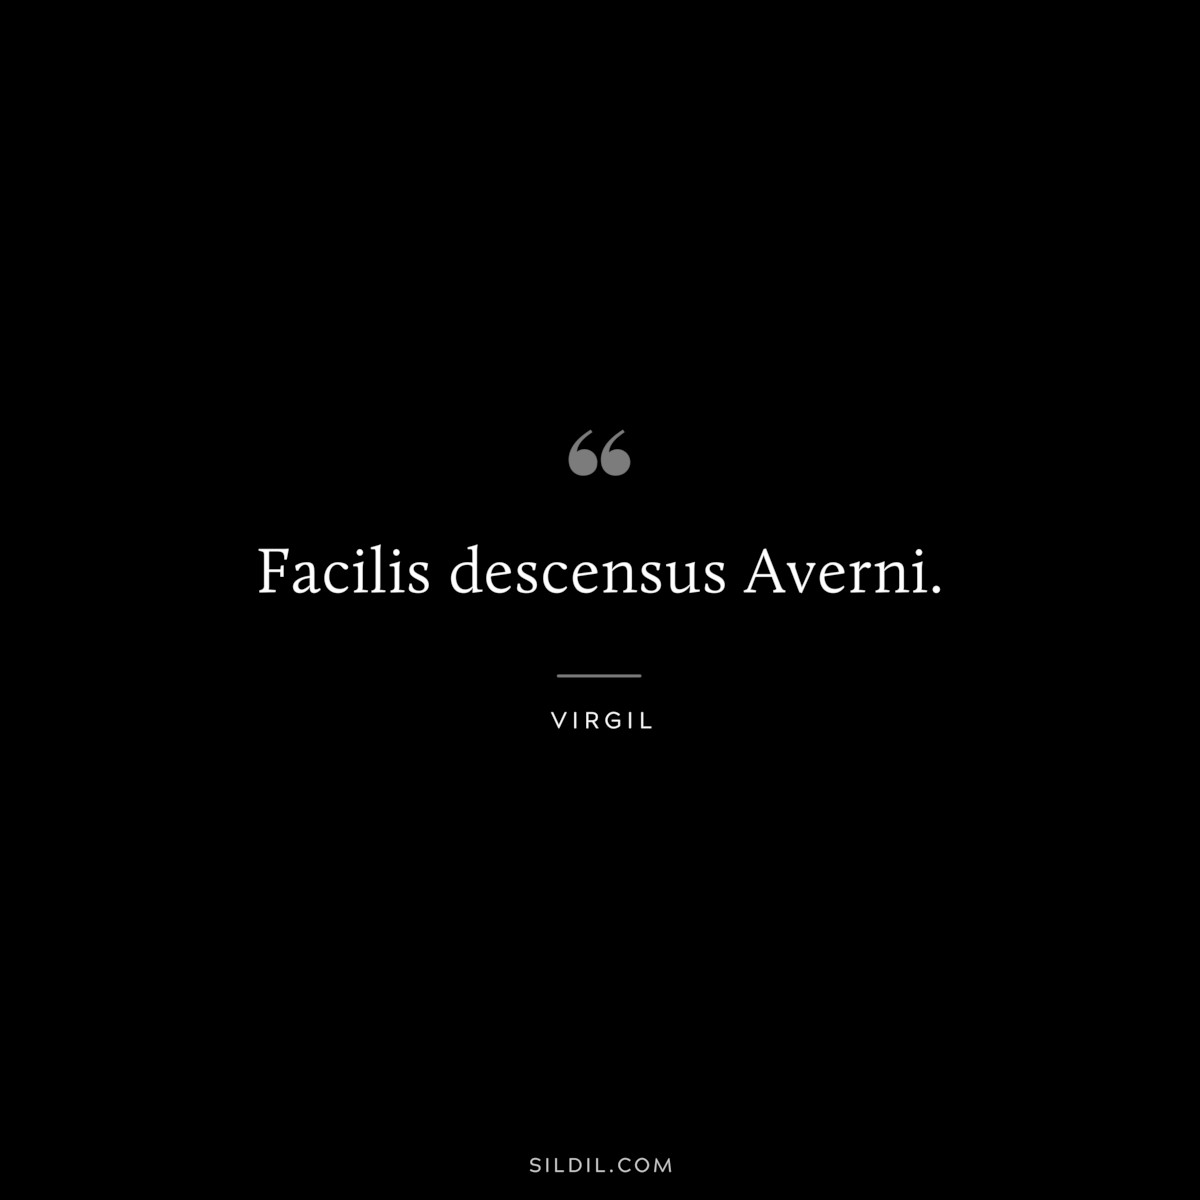 Facilis descensus Averni. ― Virgil